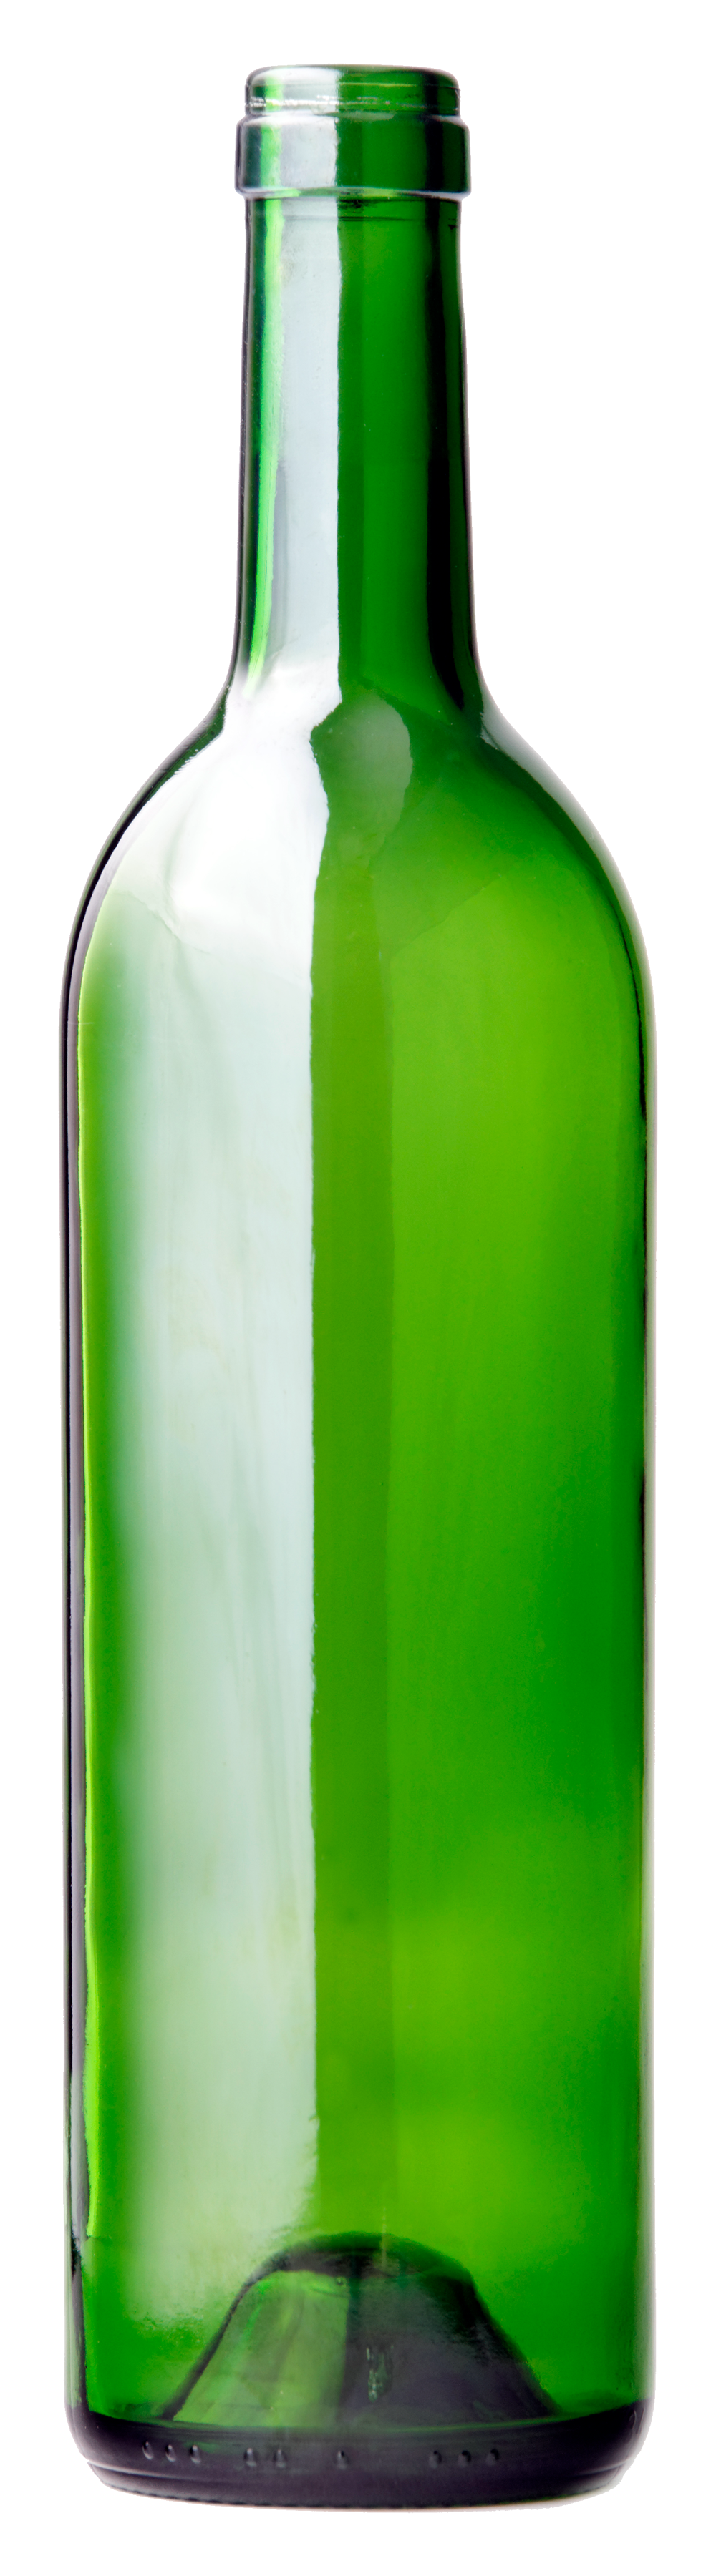 Zielona szklana butelka wina